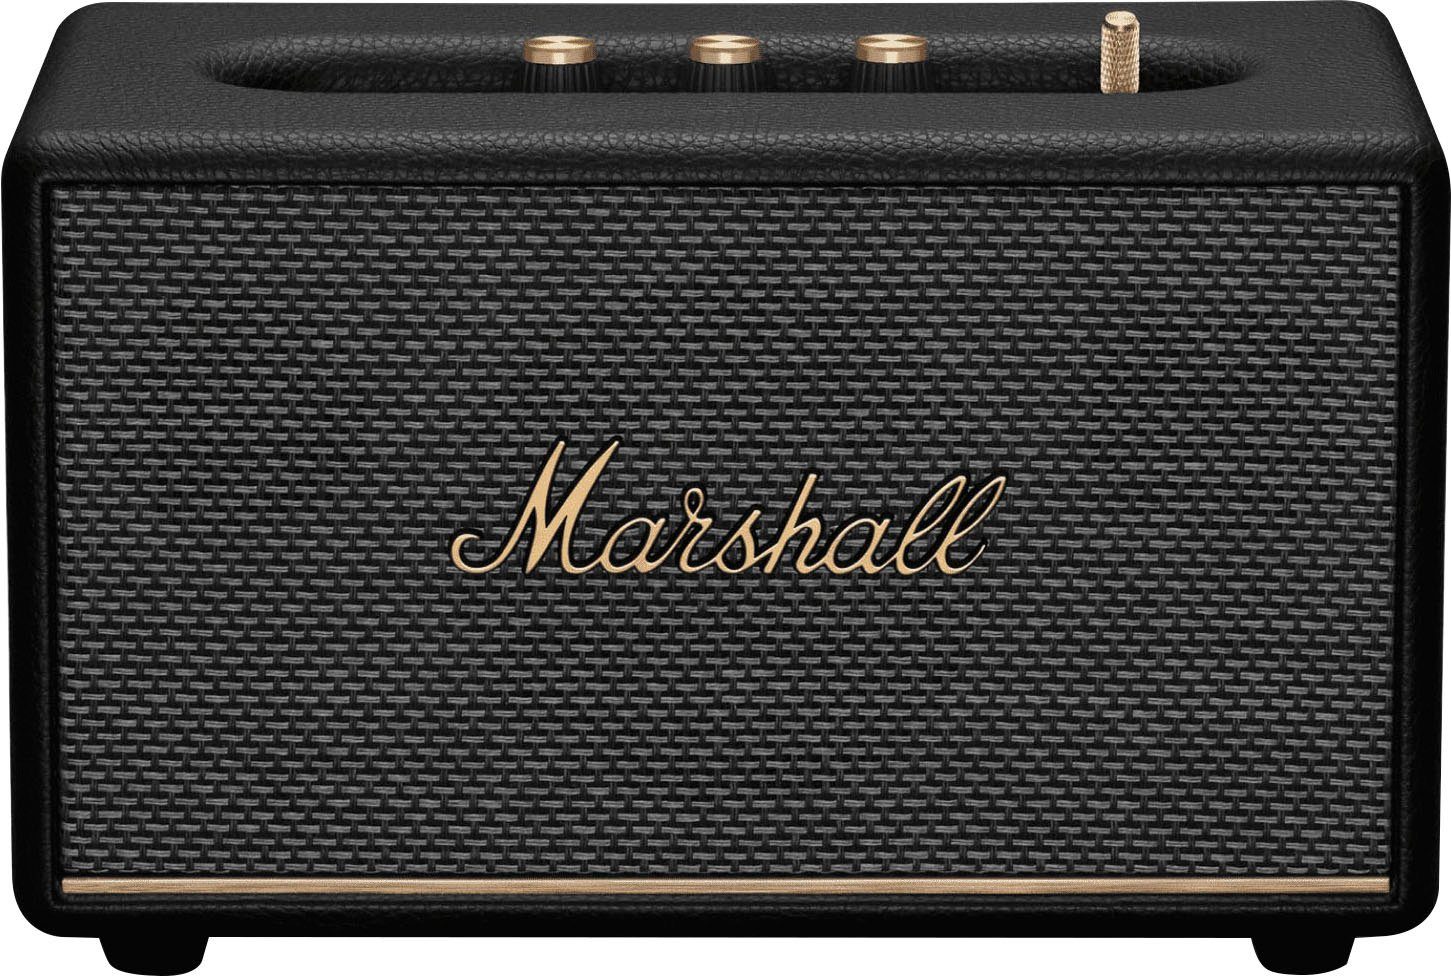 [Sonderverkaufsartikel] Marshall Acton III (Bluetooth, Stereo Bluetooth-Lautsprecher 60 W) schwarz